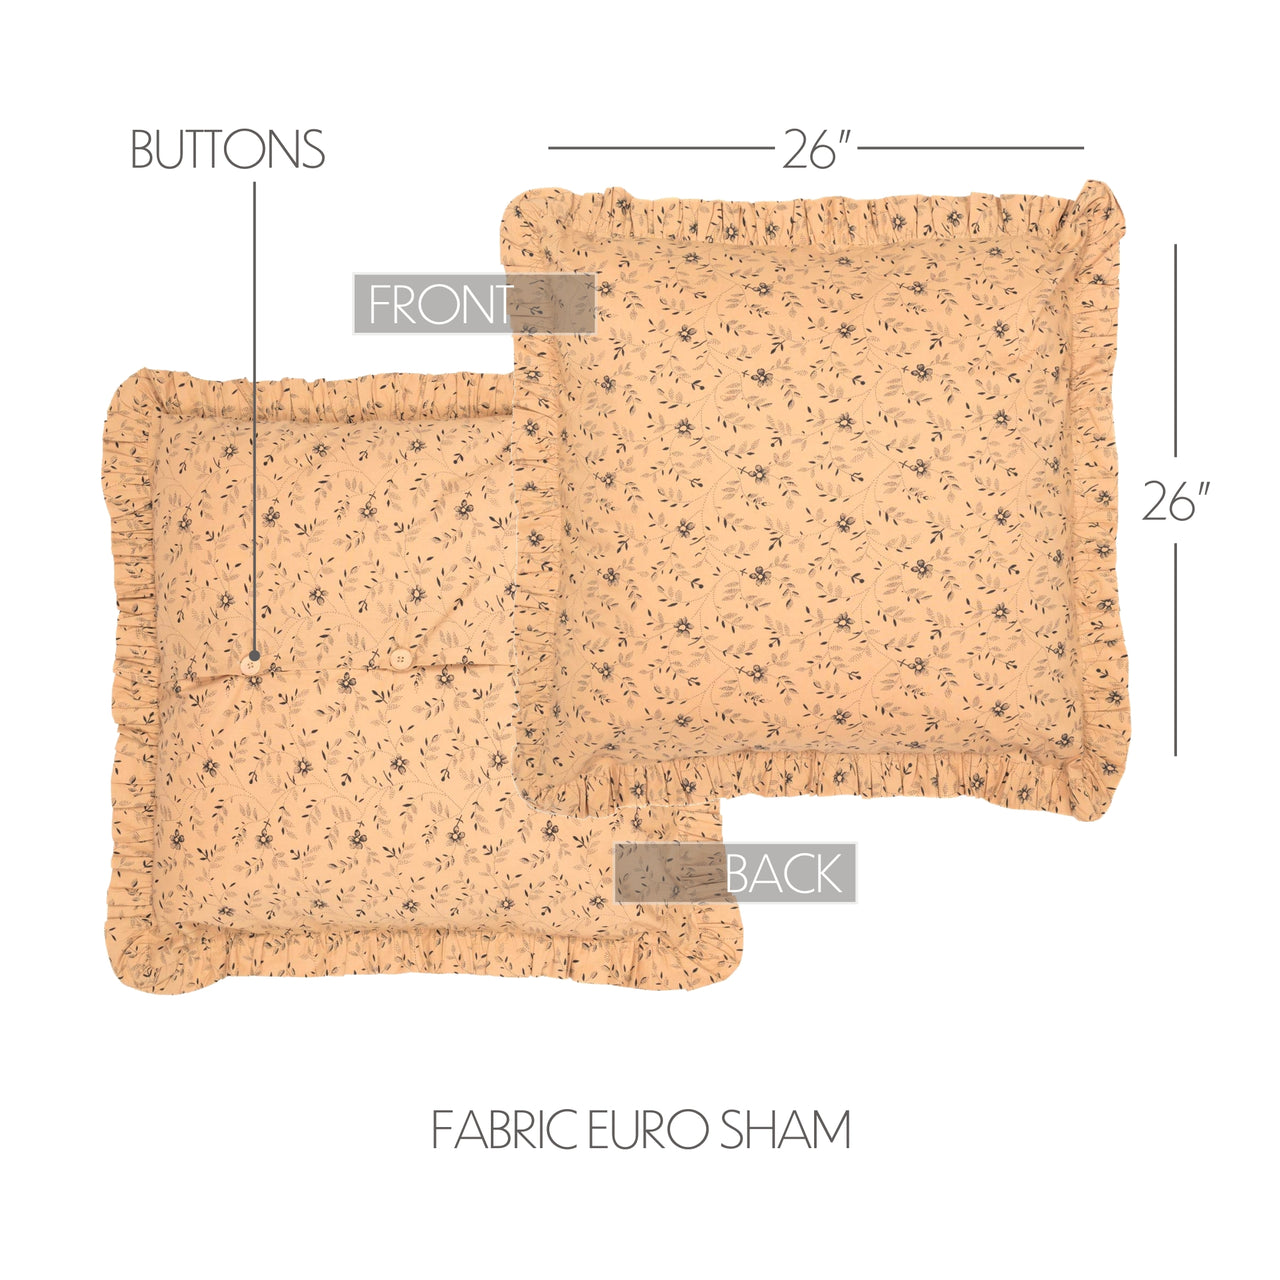 Maisie Fabric Euro Sham 26x26 VHC Brands